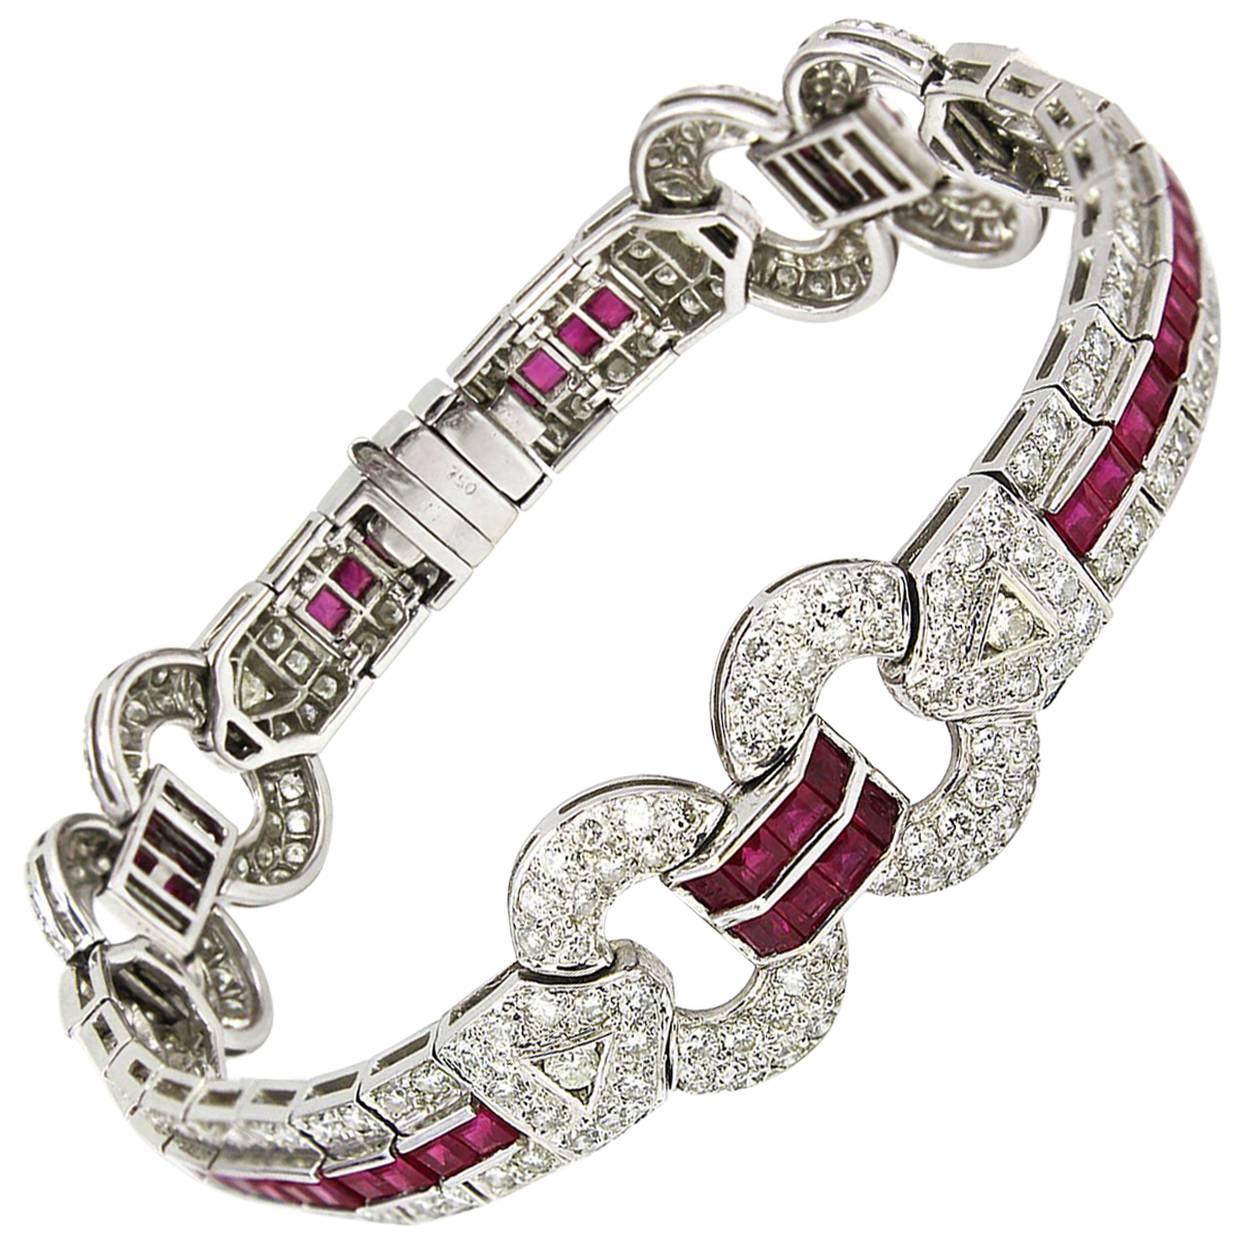 Diamond Ruby Bracelet